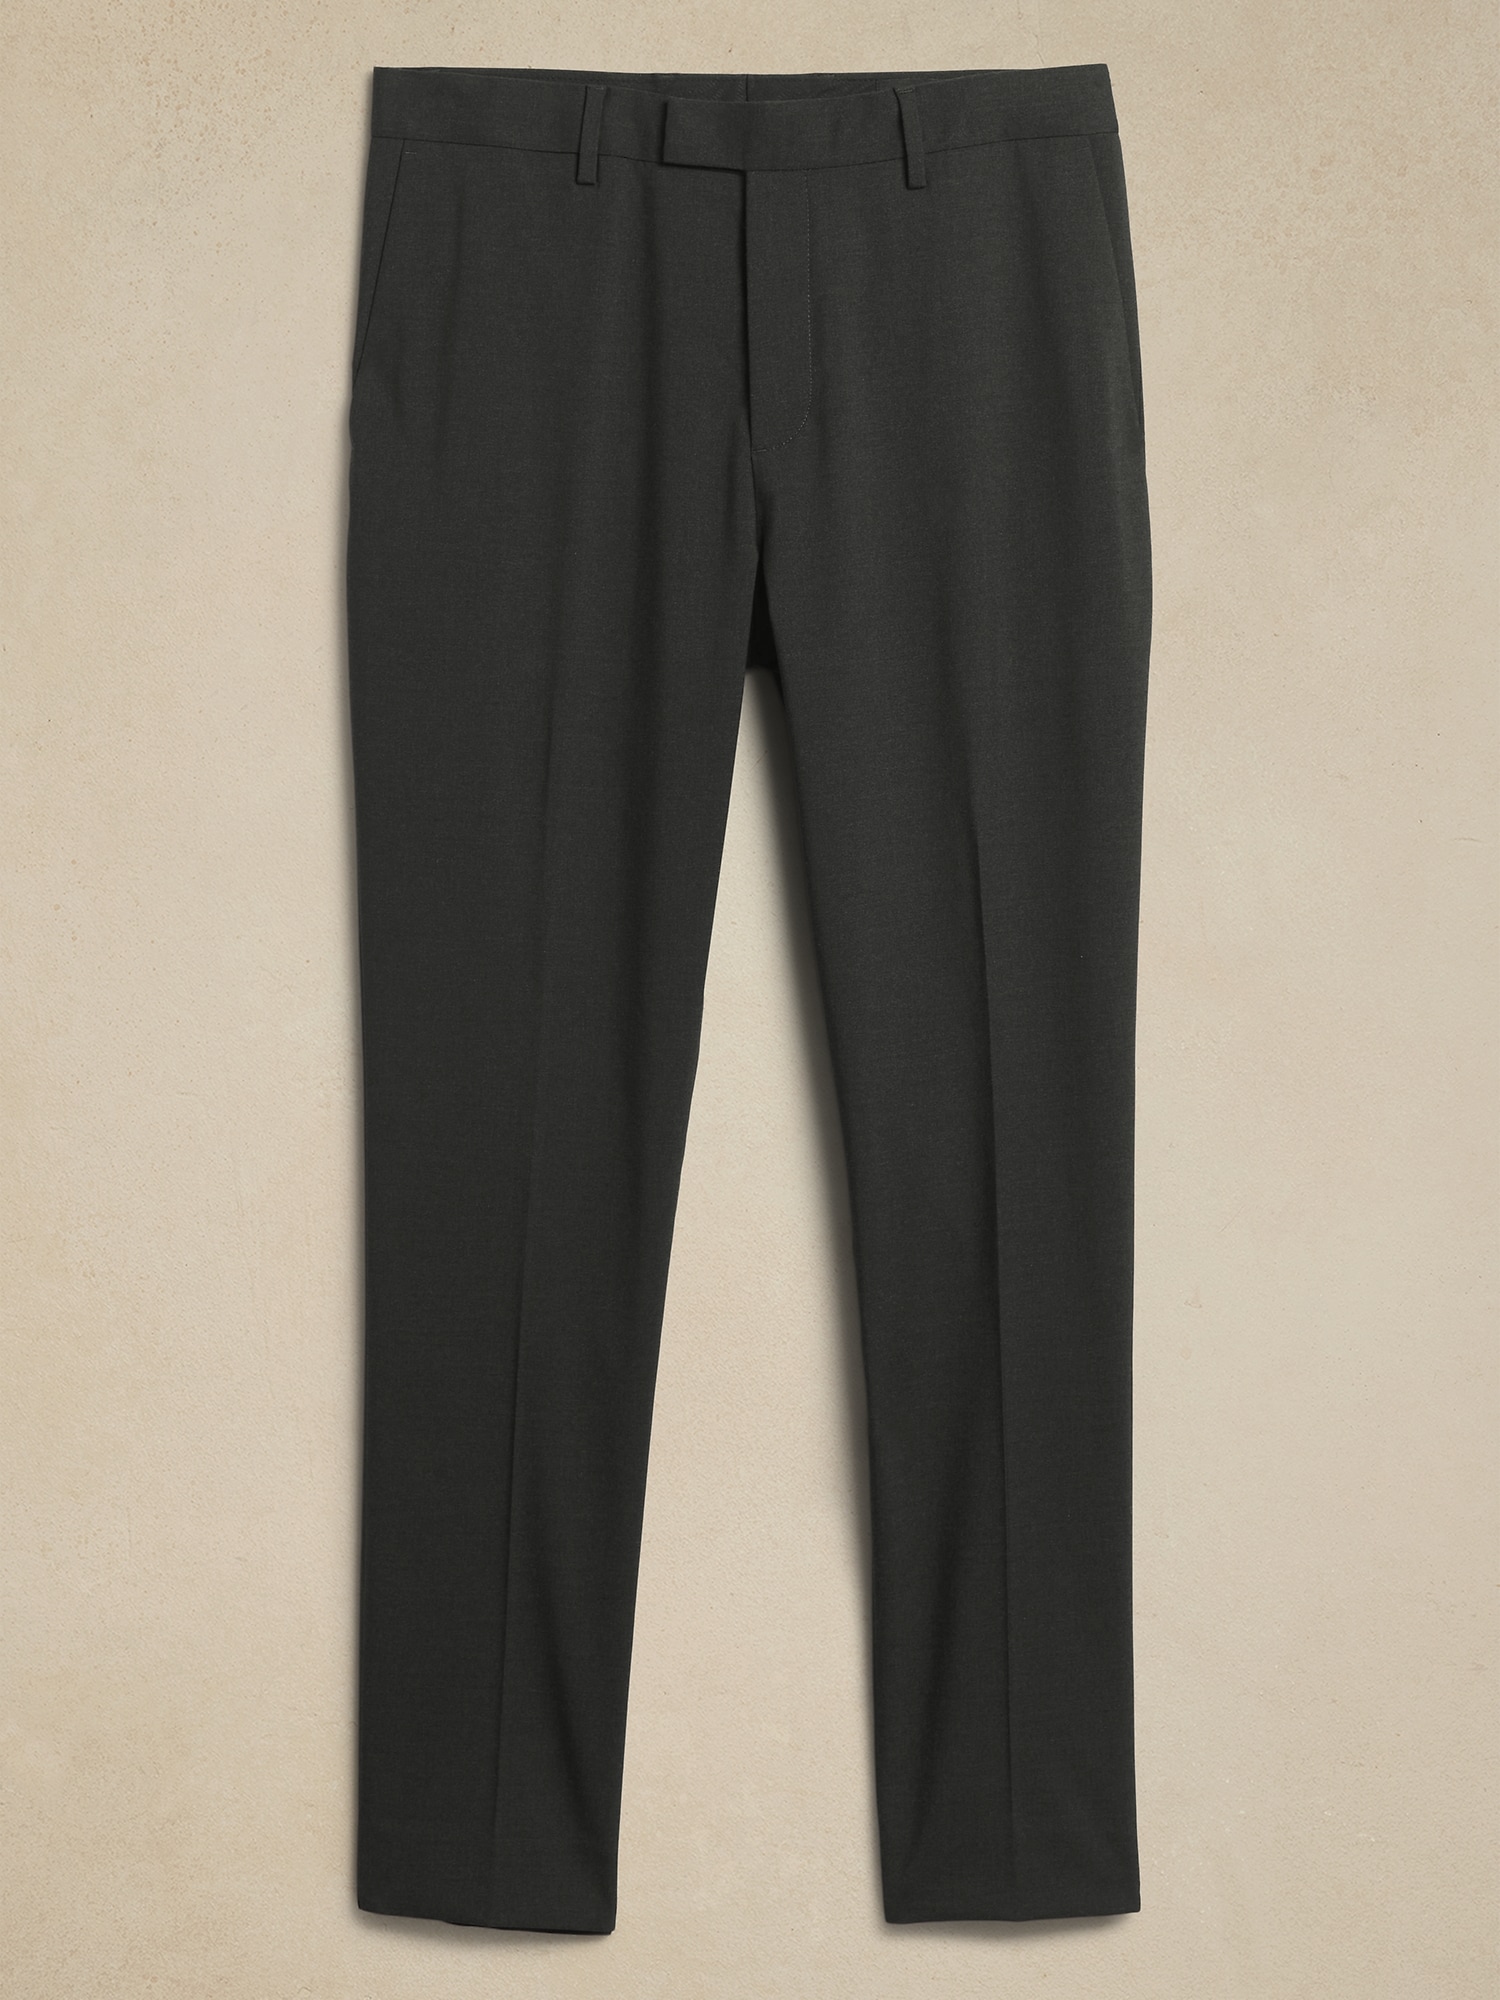 Men's Black Classic Fit Dinner Suit Trousers| Hawes & Curtis